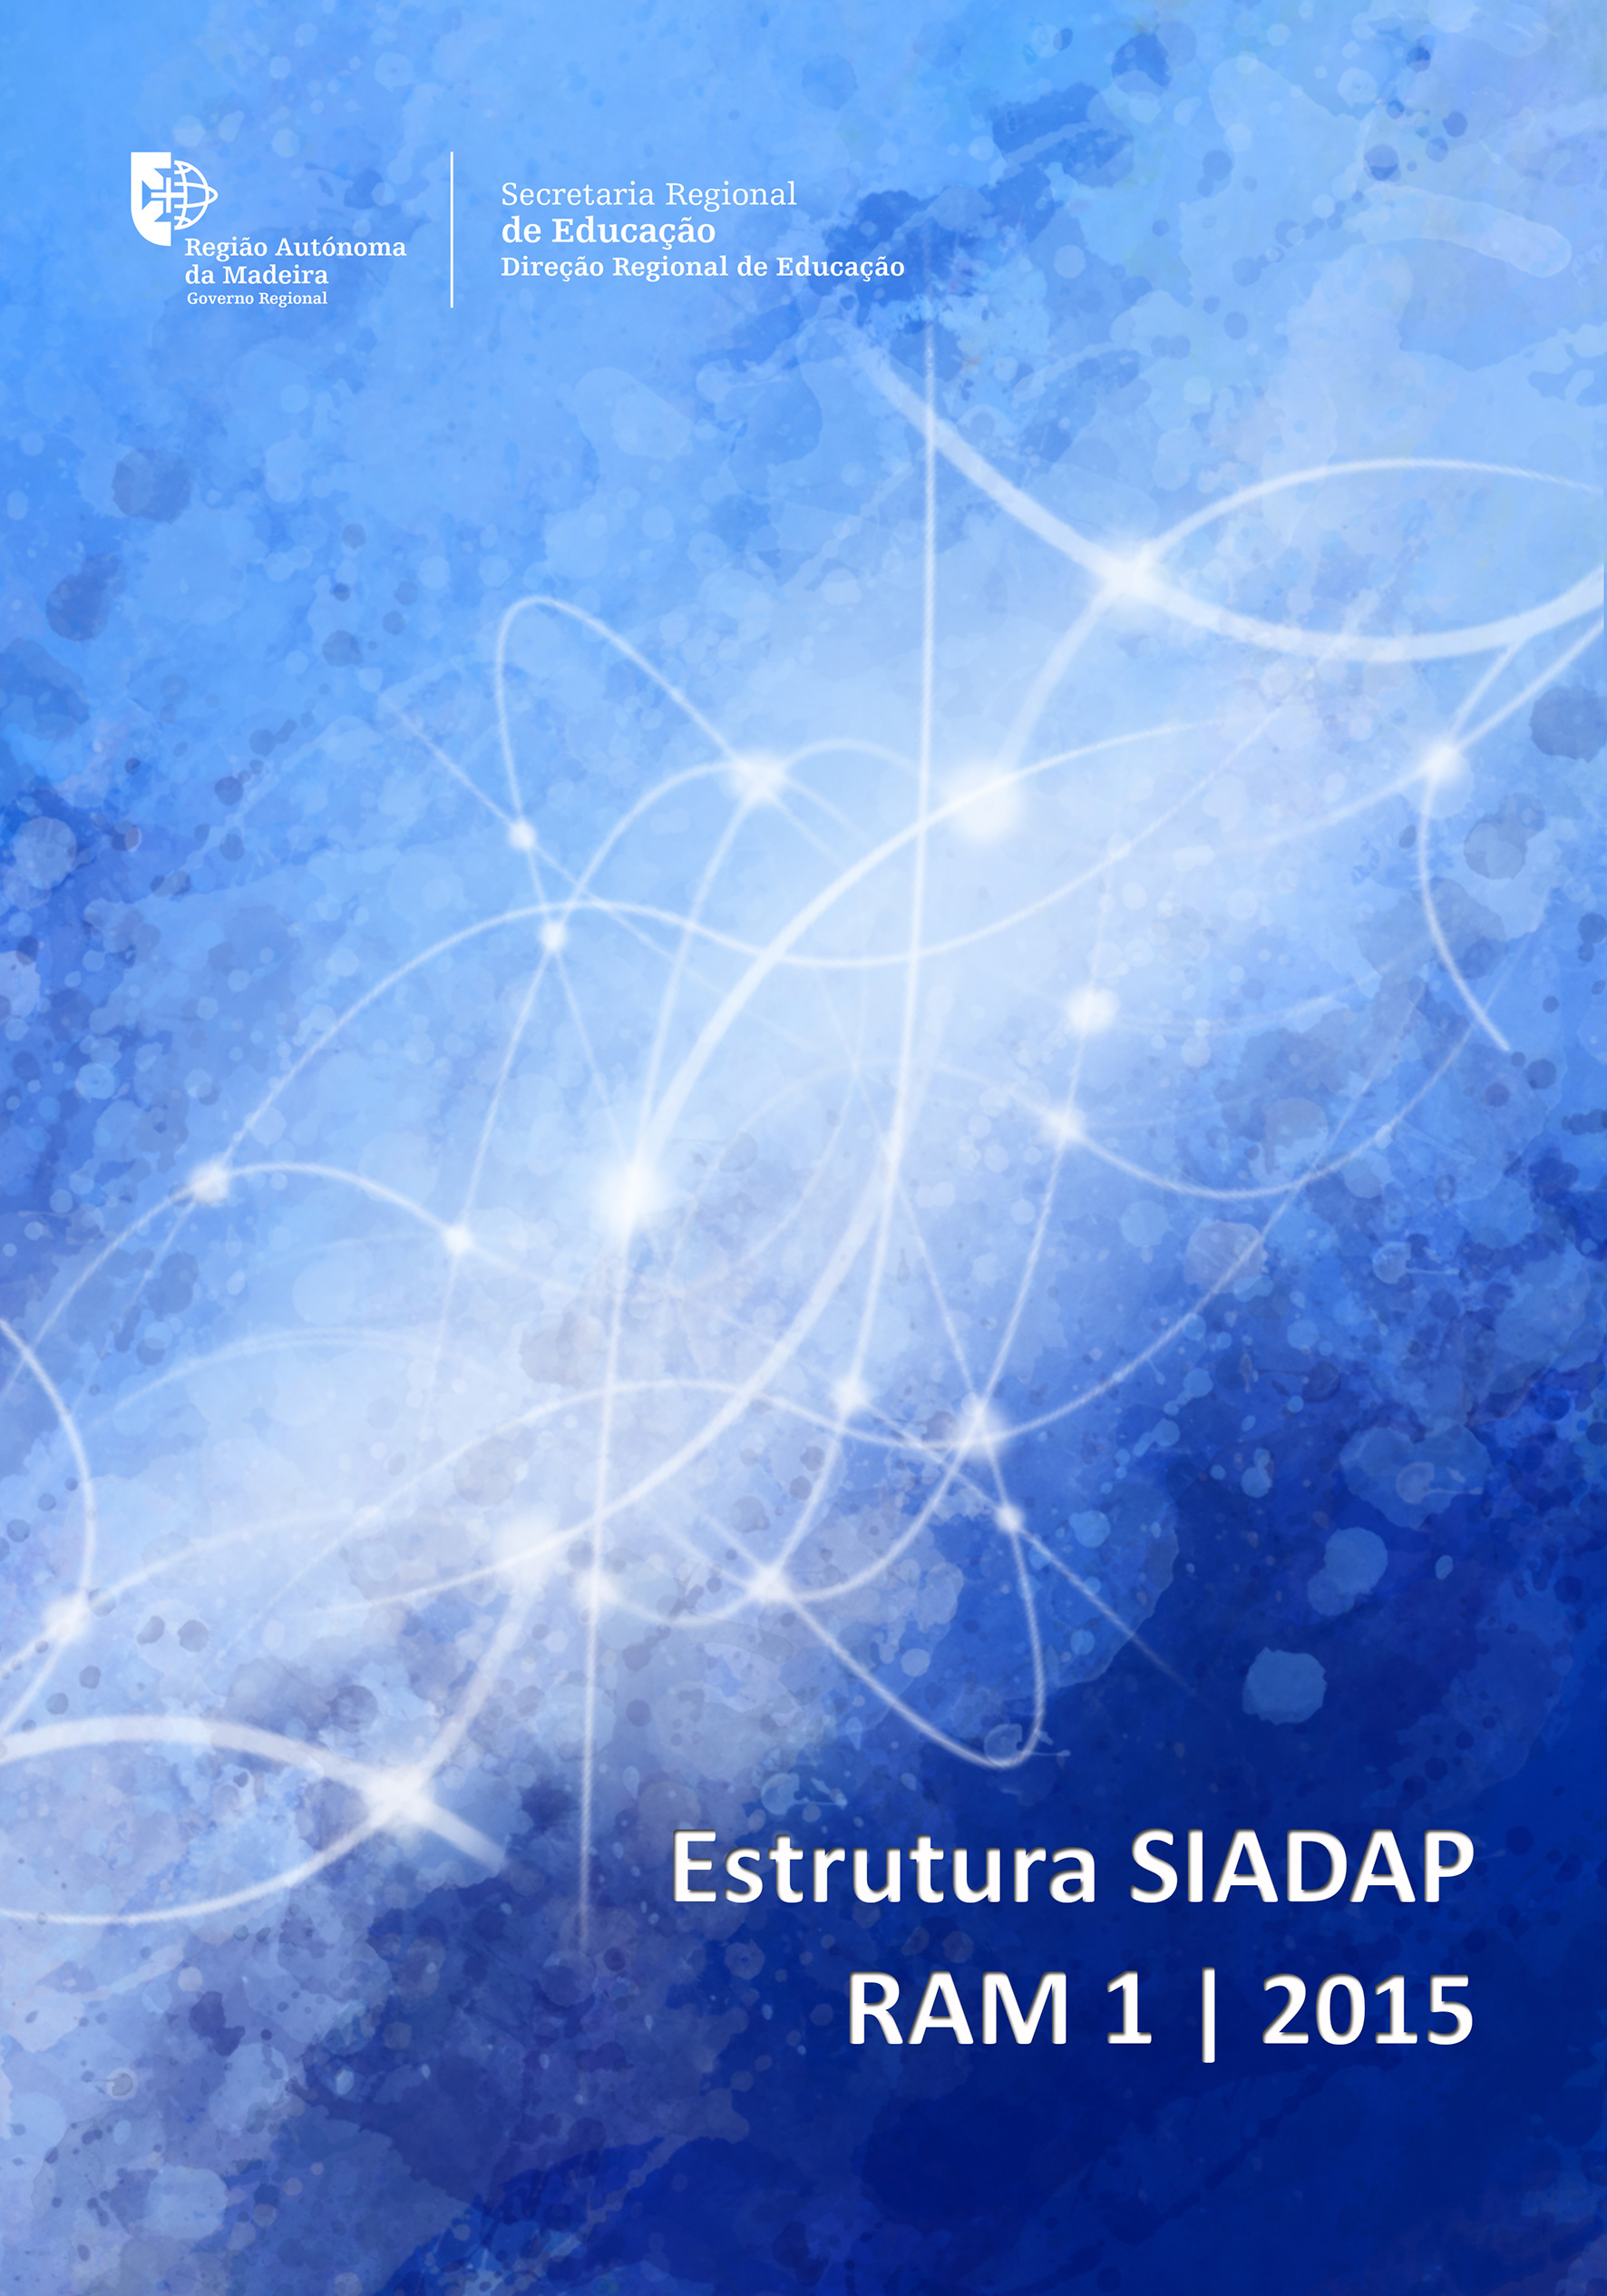 Estrutura SIADAP-RAM 1 2015